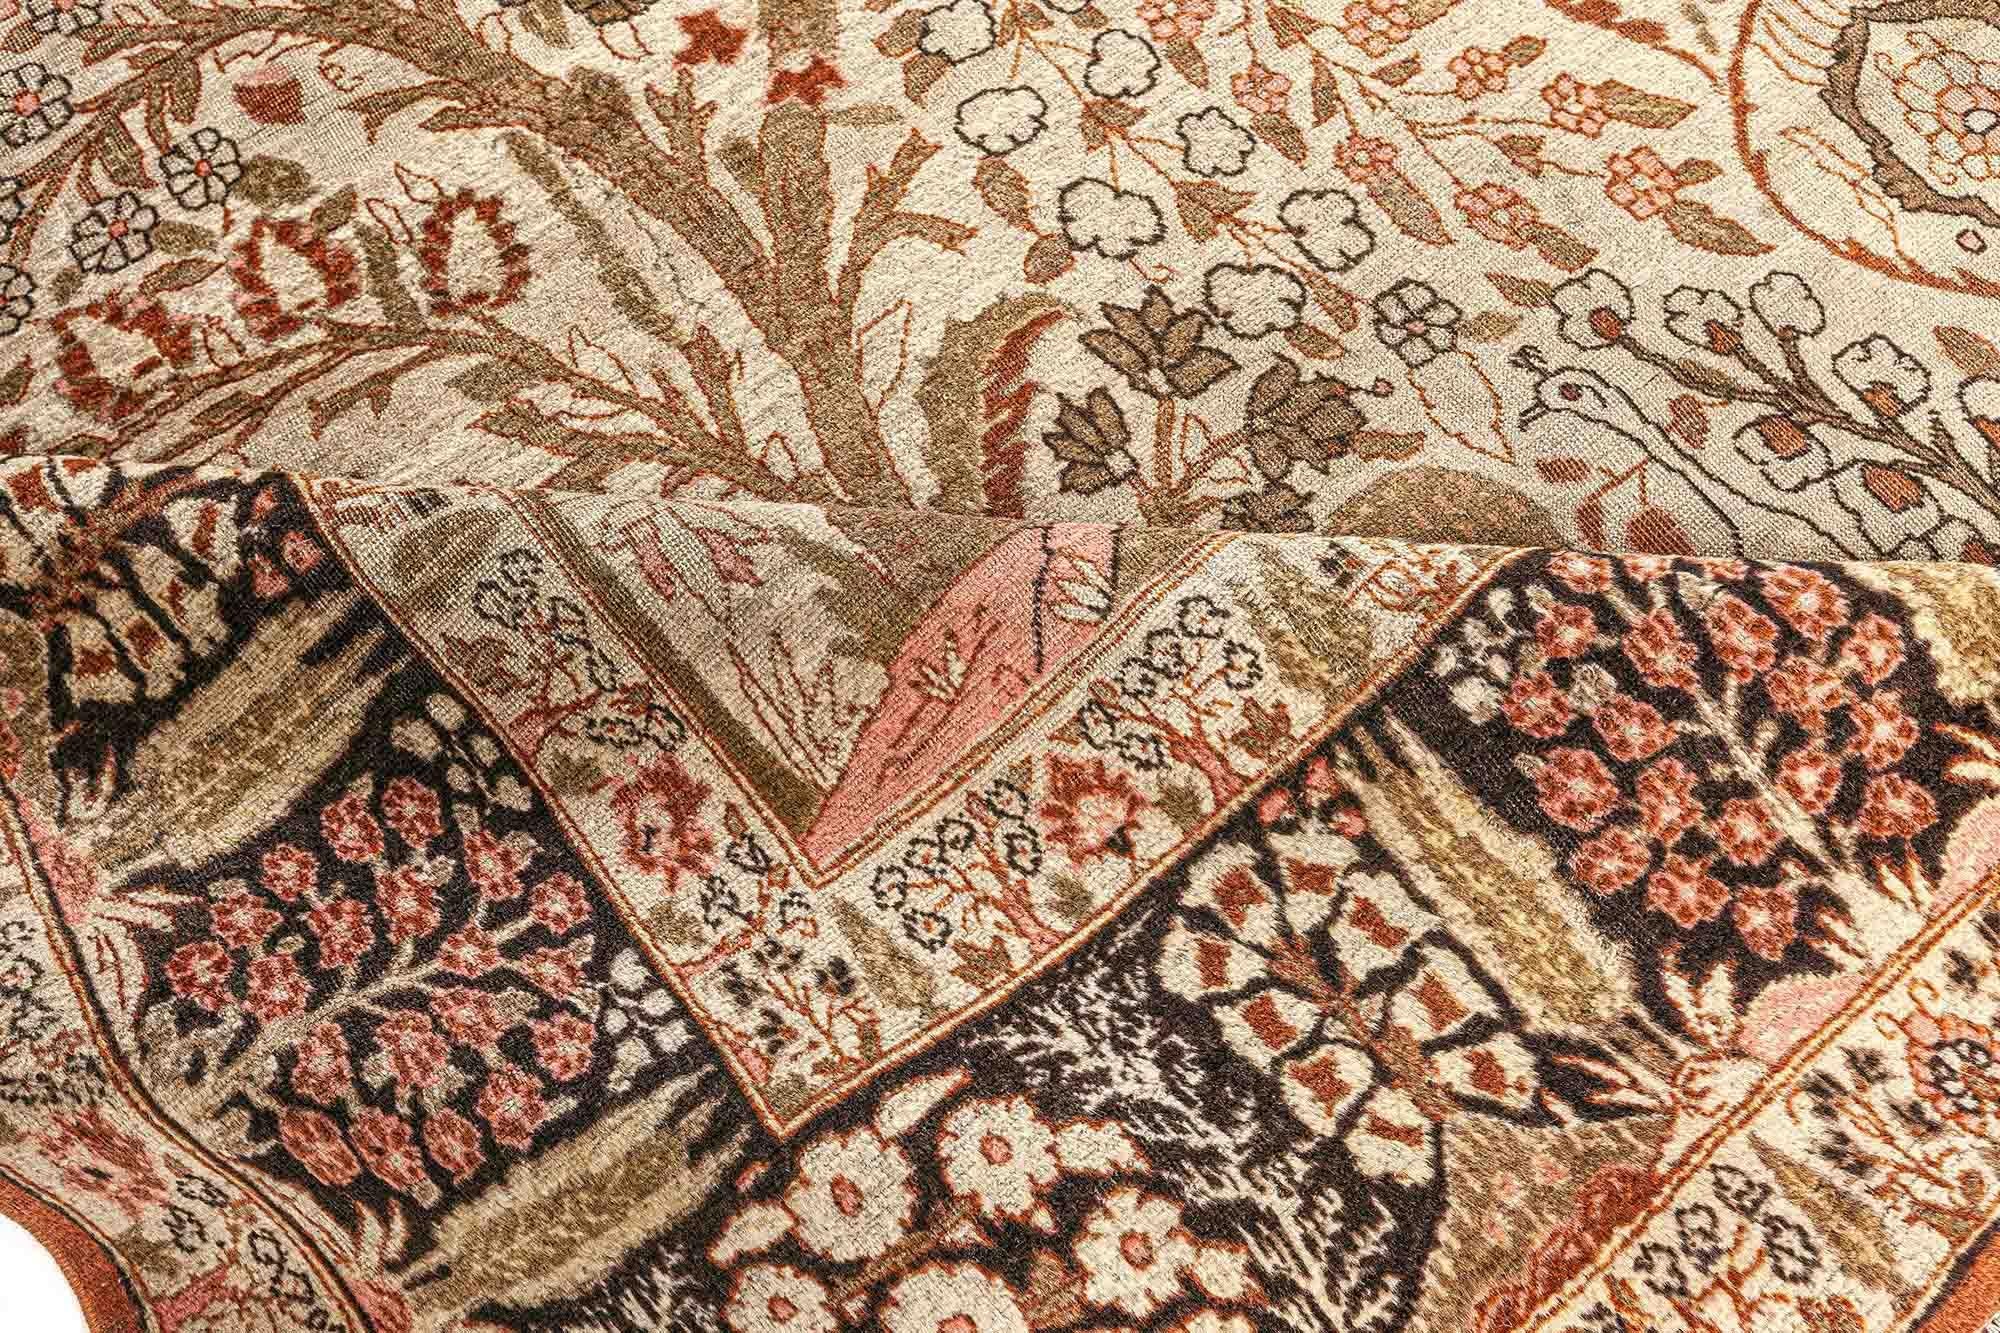 Antique Persian Tabriz rug
Size: 10'9